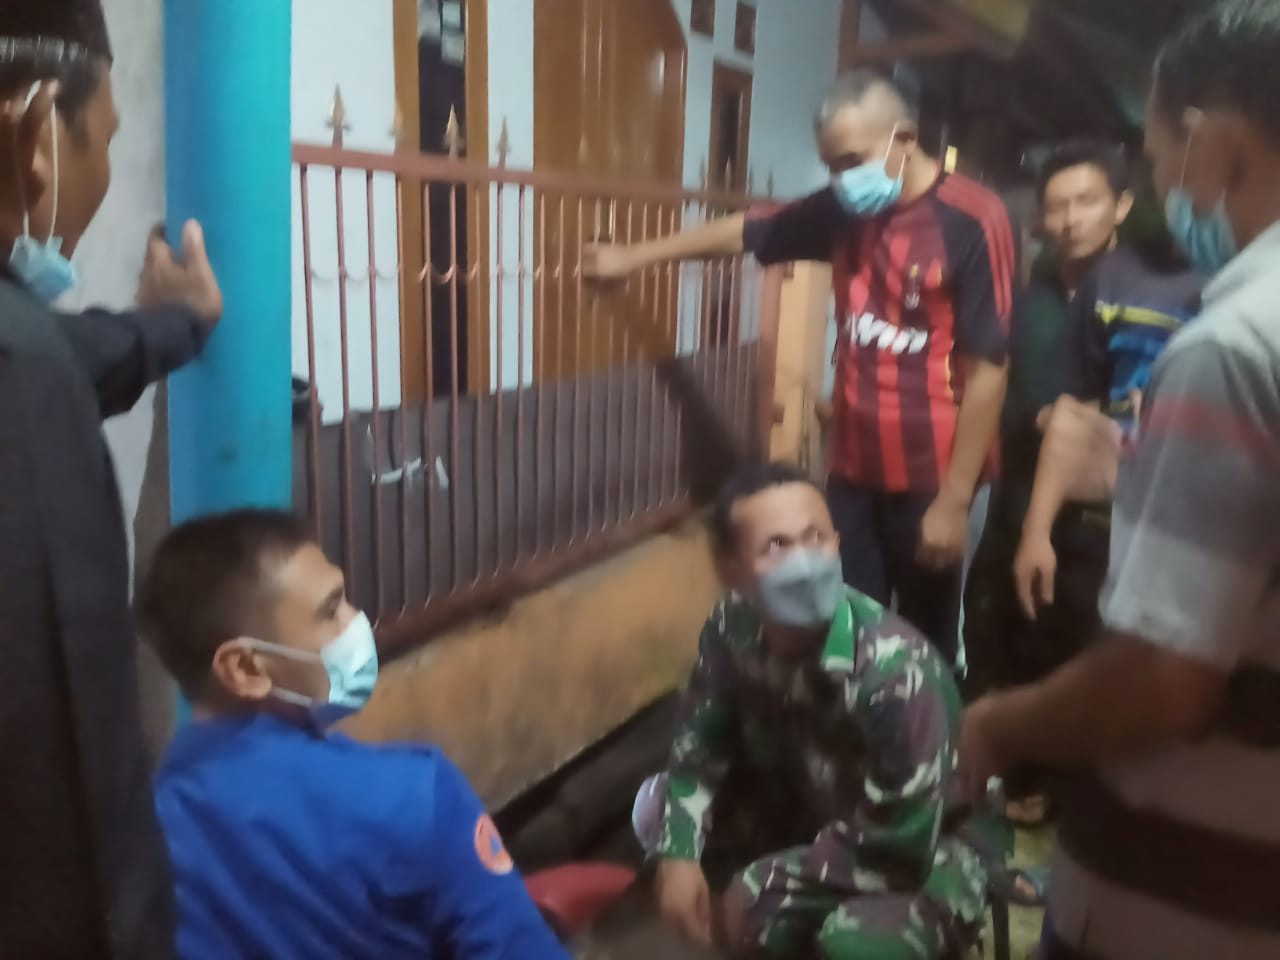 Petugas gabungan dan warga setempat saat hendak mencari anak berusia dua tahun yang hilang karena terseret arus air selokan di Jalan Tanah 100, Swadaya II, Sudimara, Kecamatan Ciledug, Kota Tangerang, Jumat 4 Juni 2021 sekitar pukul 17.30 WIB.